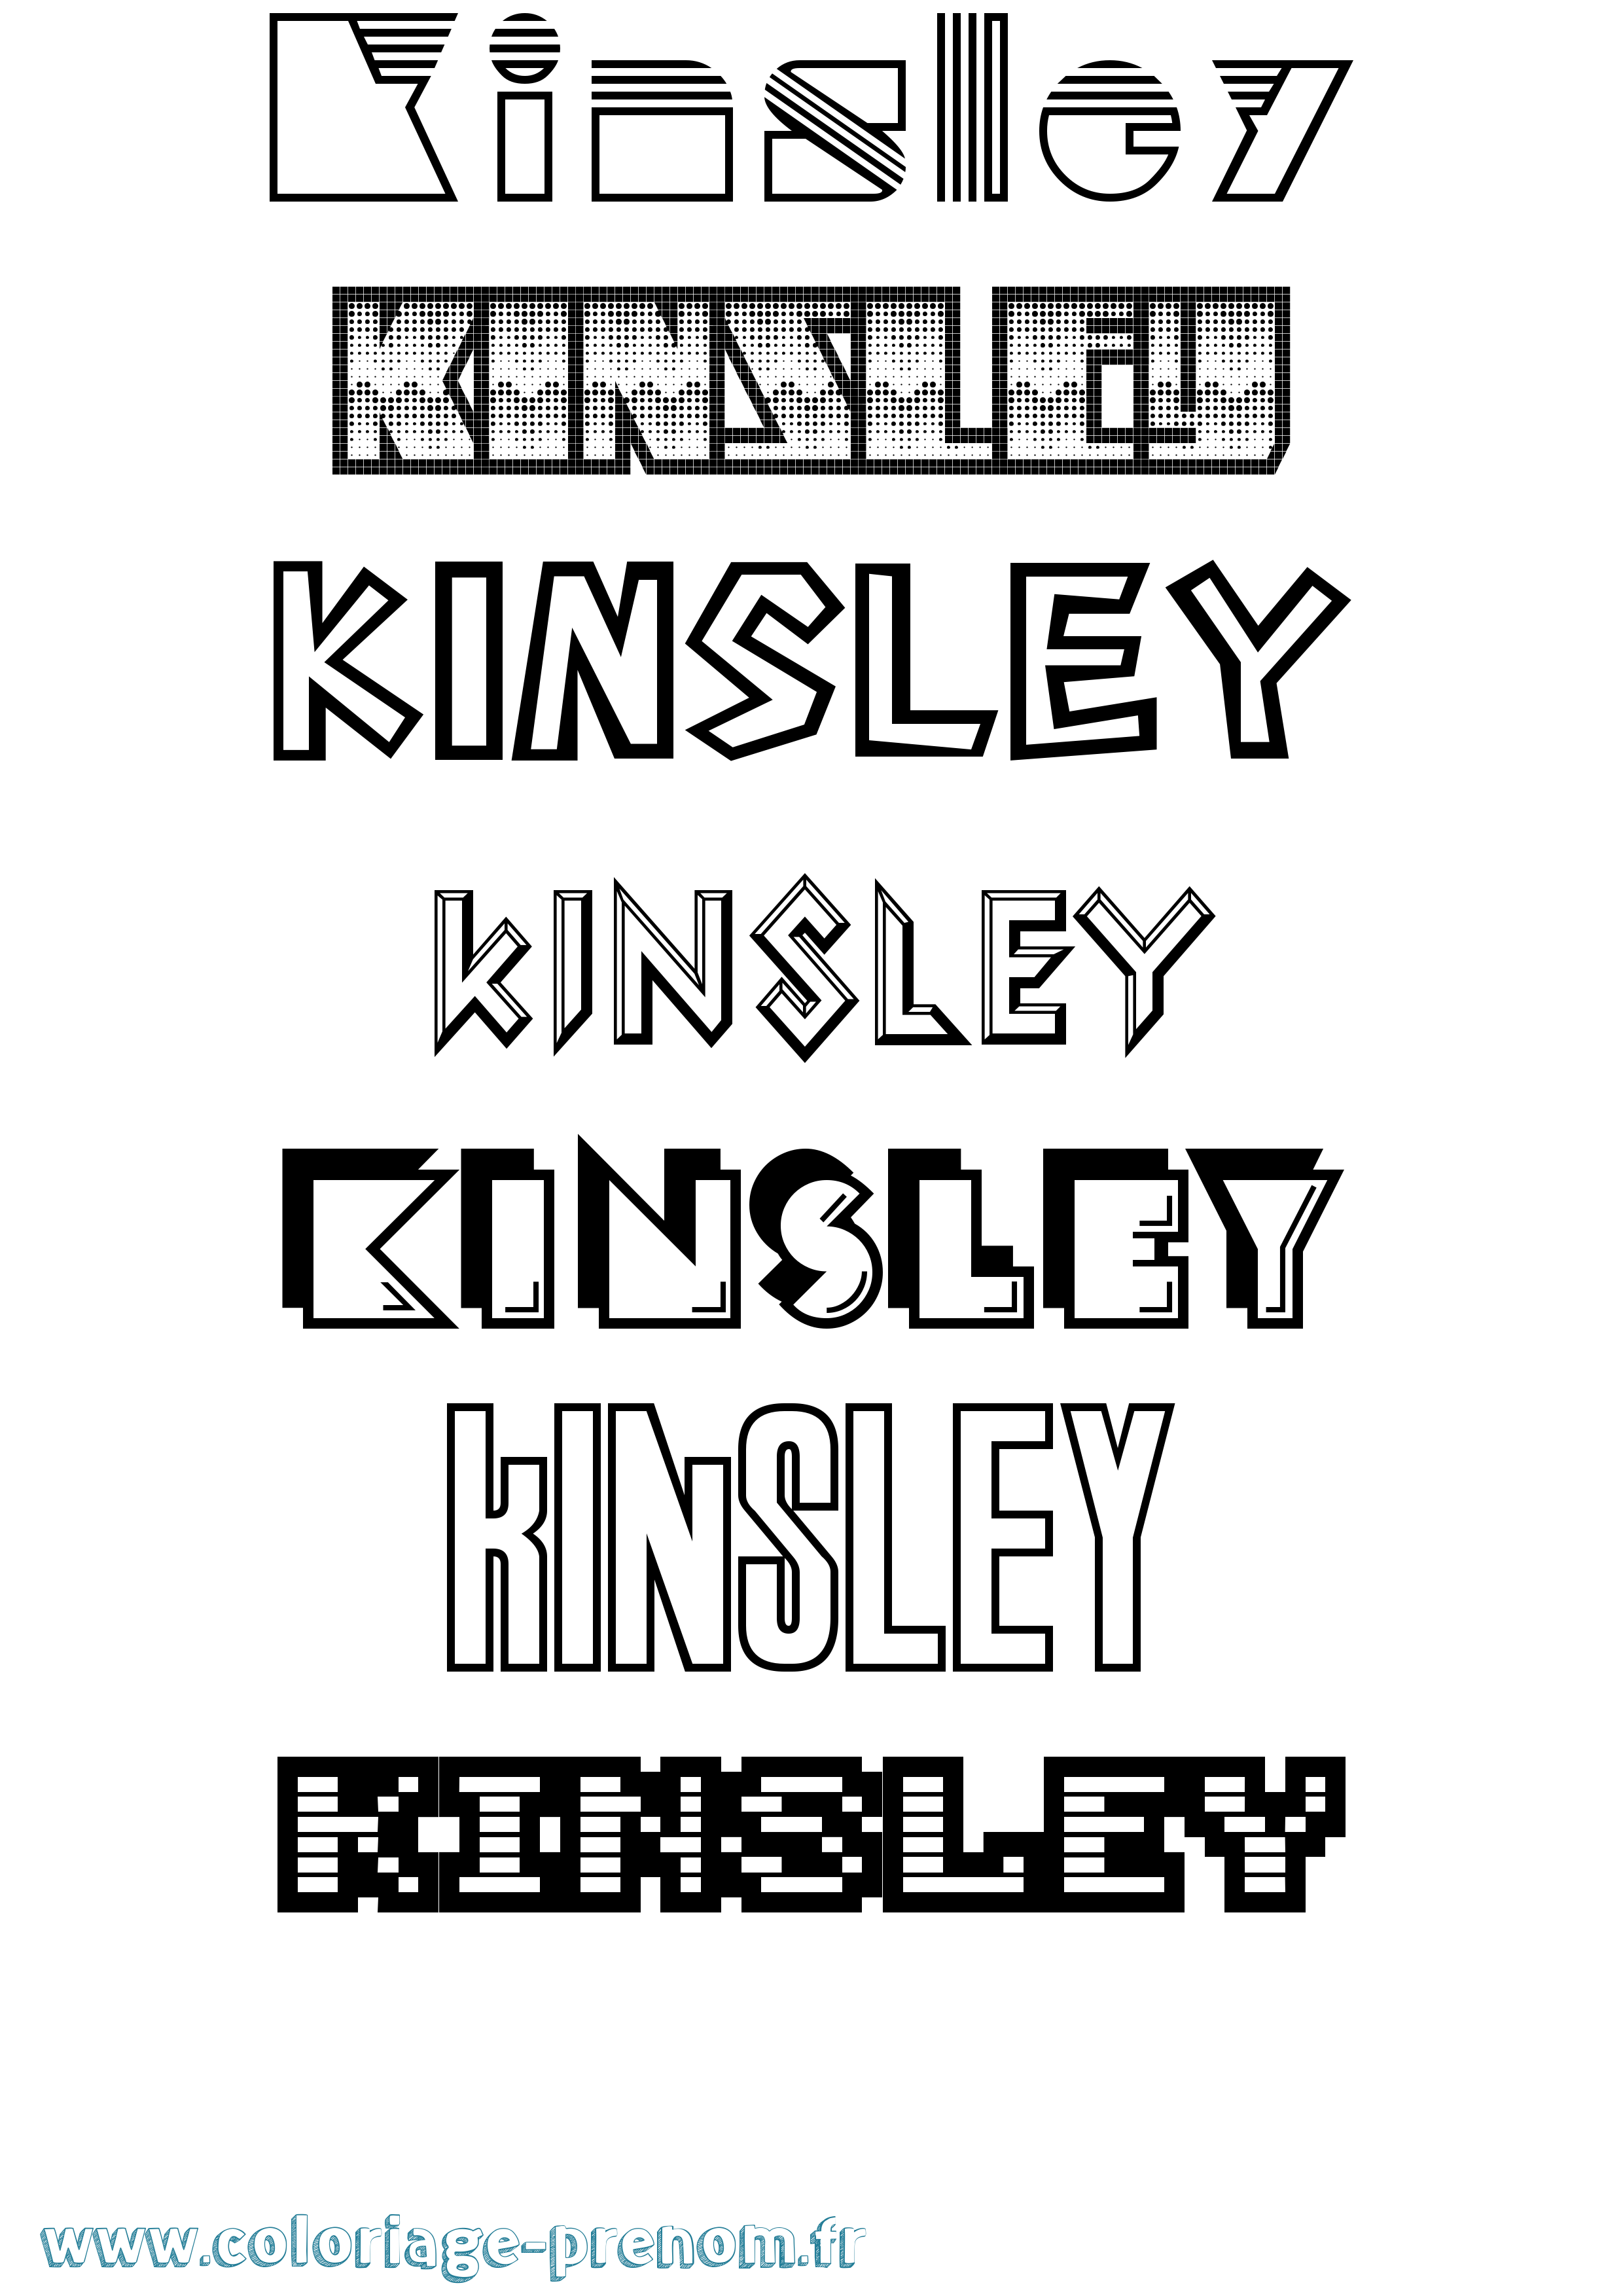 Coloriage prénom Kinsley Jeux Vidéos